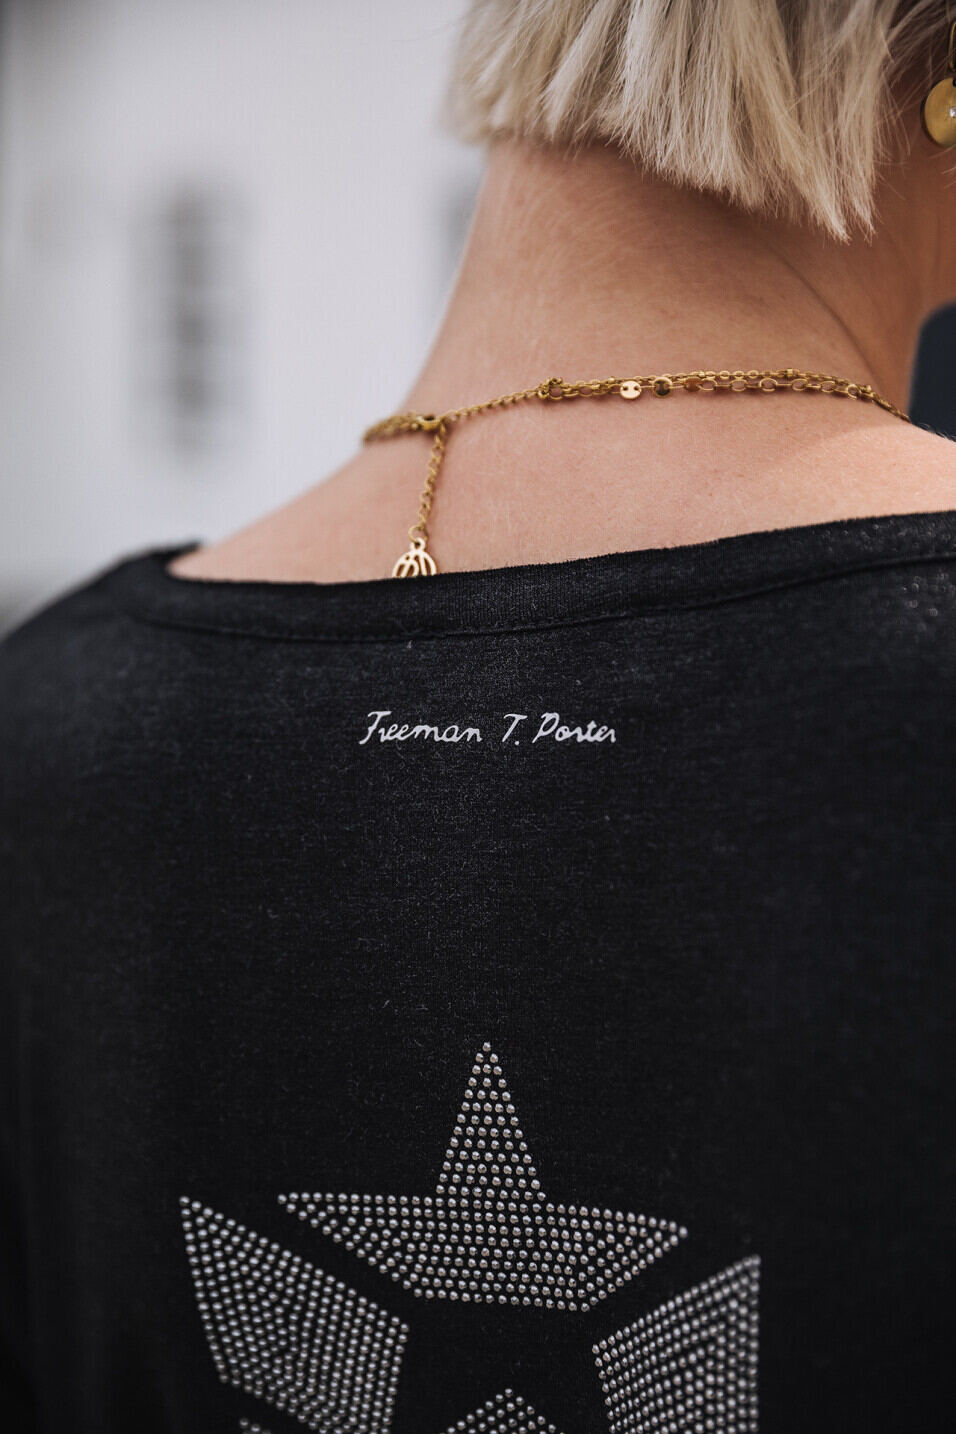 Torina Icon Black | Femme's collection - Freeman T. Porter